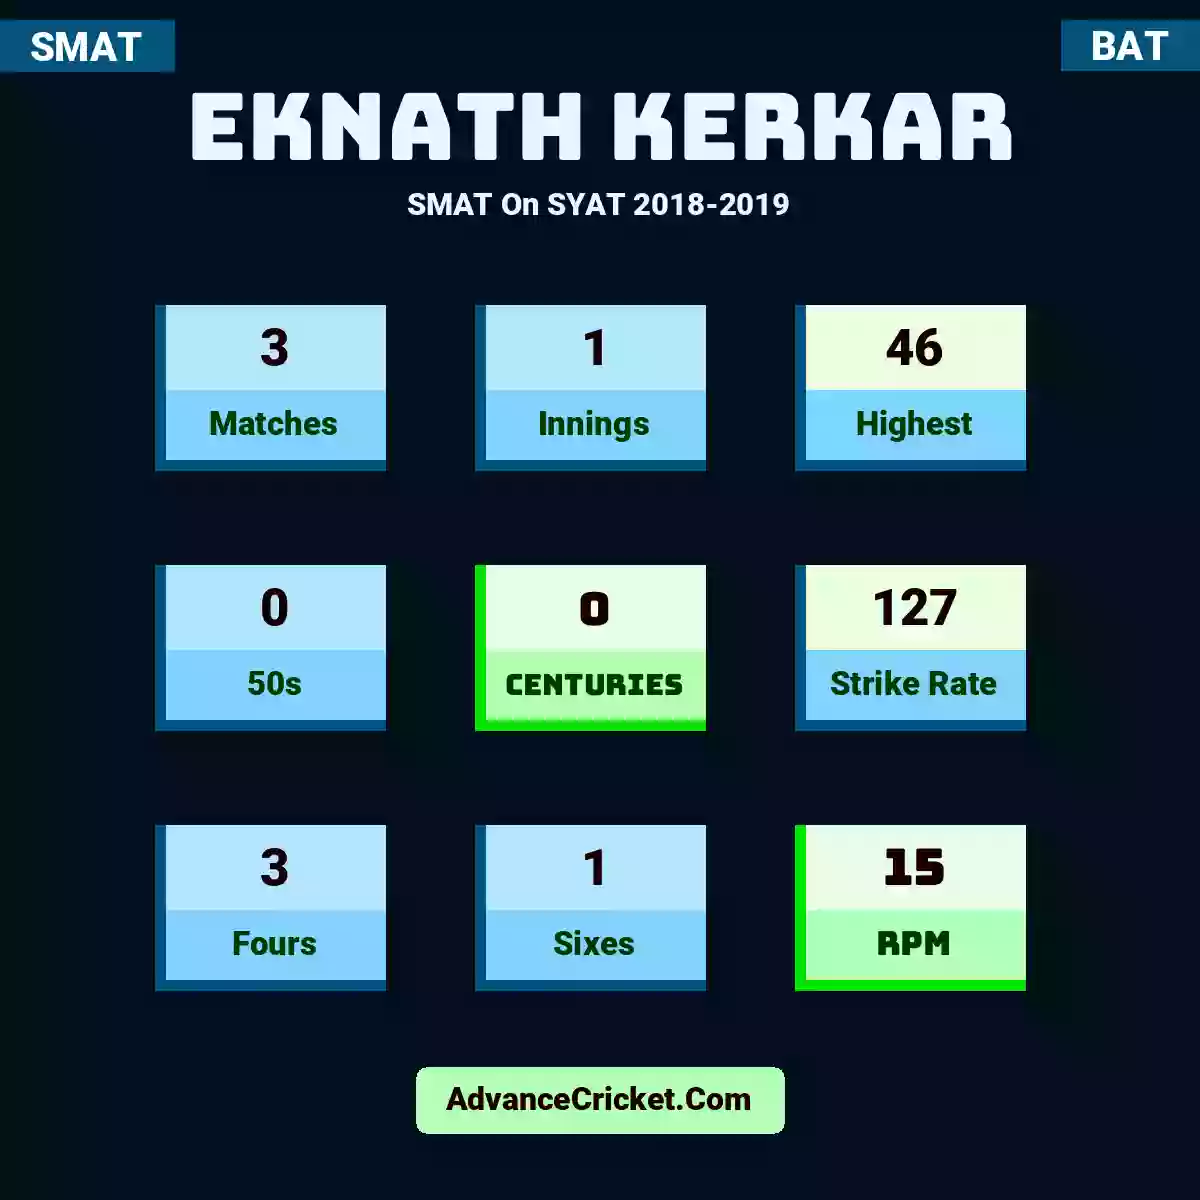 Eknath Kerkar SMAT  On SYAT 2018-2019, Eknath Kerkar played 3 matches, scored 46 runs as highest, 0 half-centuries, and 0 centuries, with a strike rate of 127. E.Kerkar hit 3 fours and 1 sixes, with an RPM of 15.